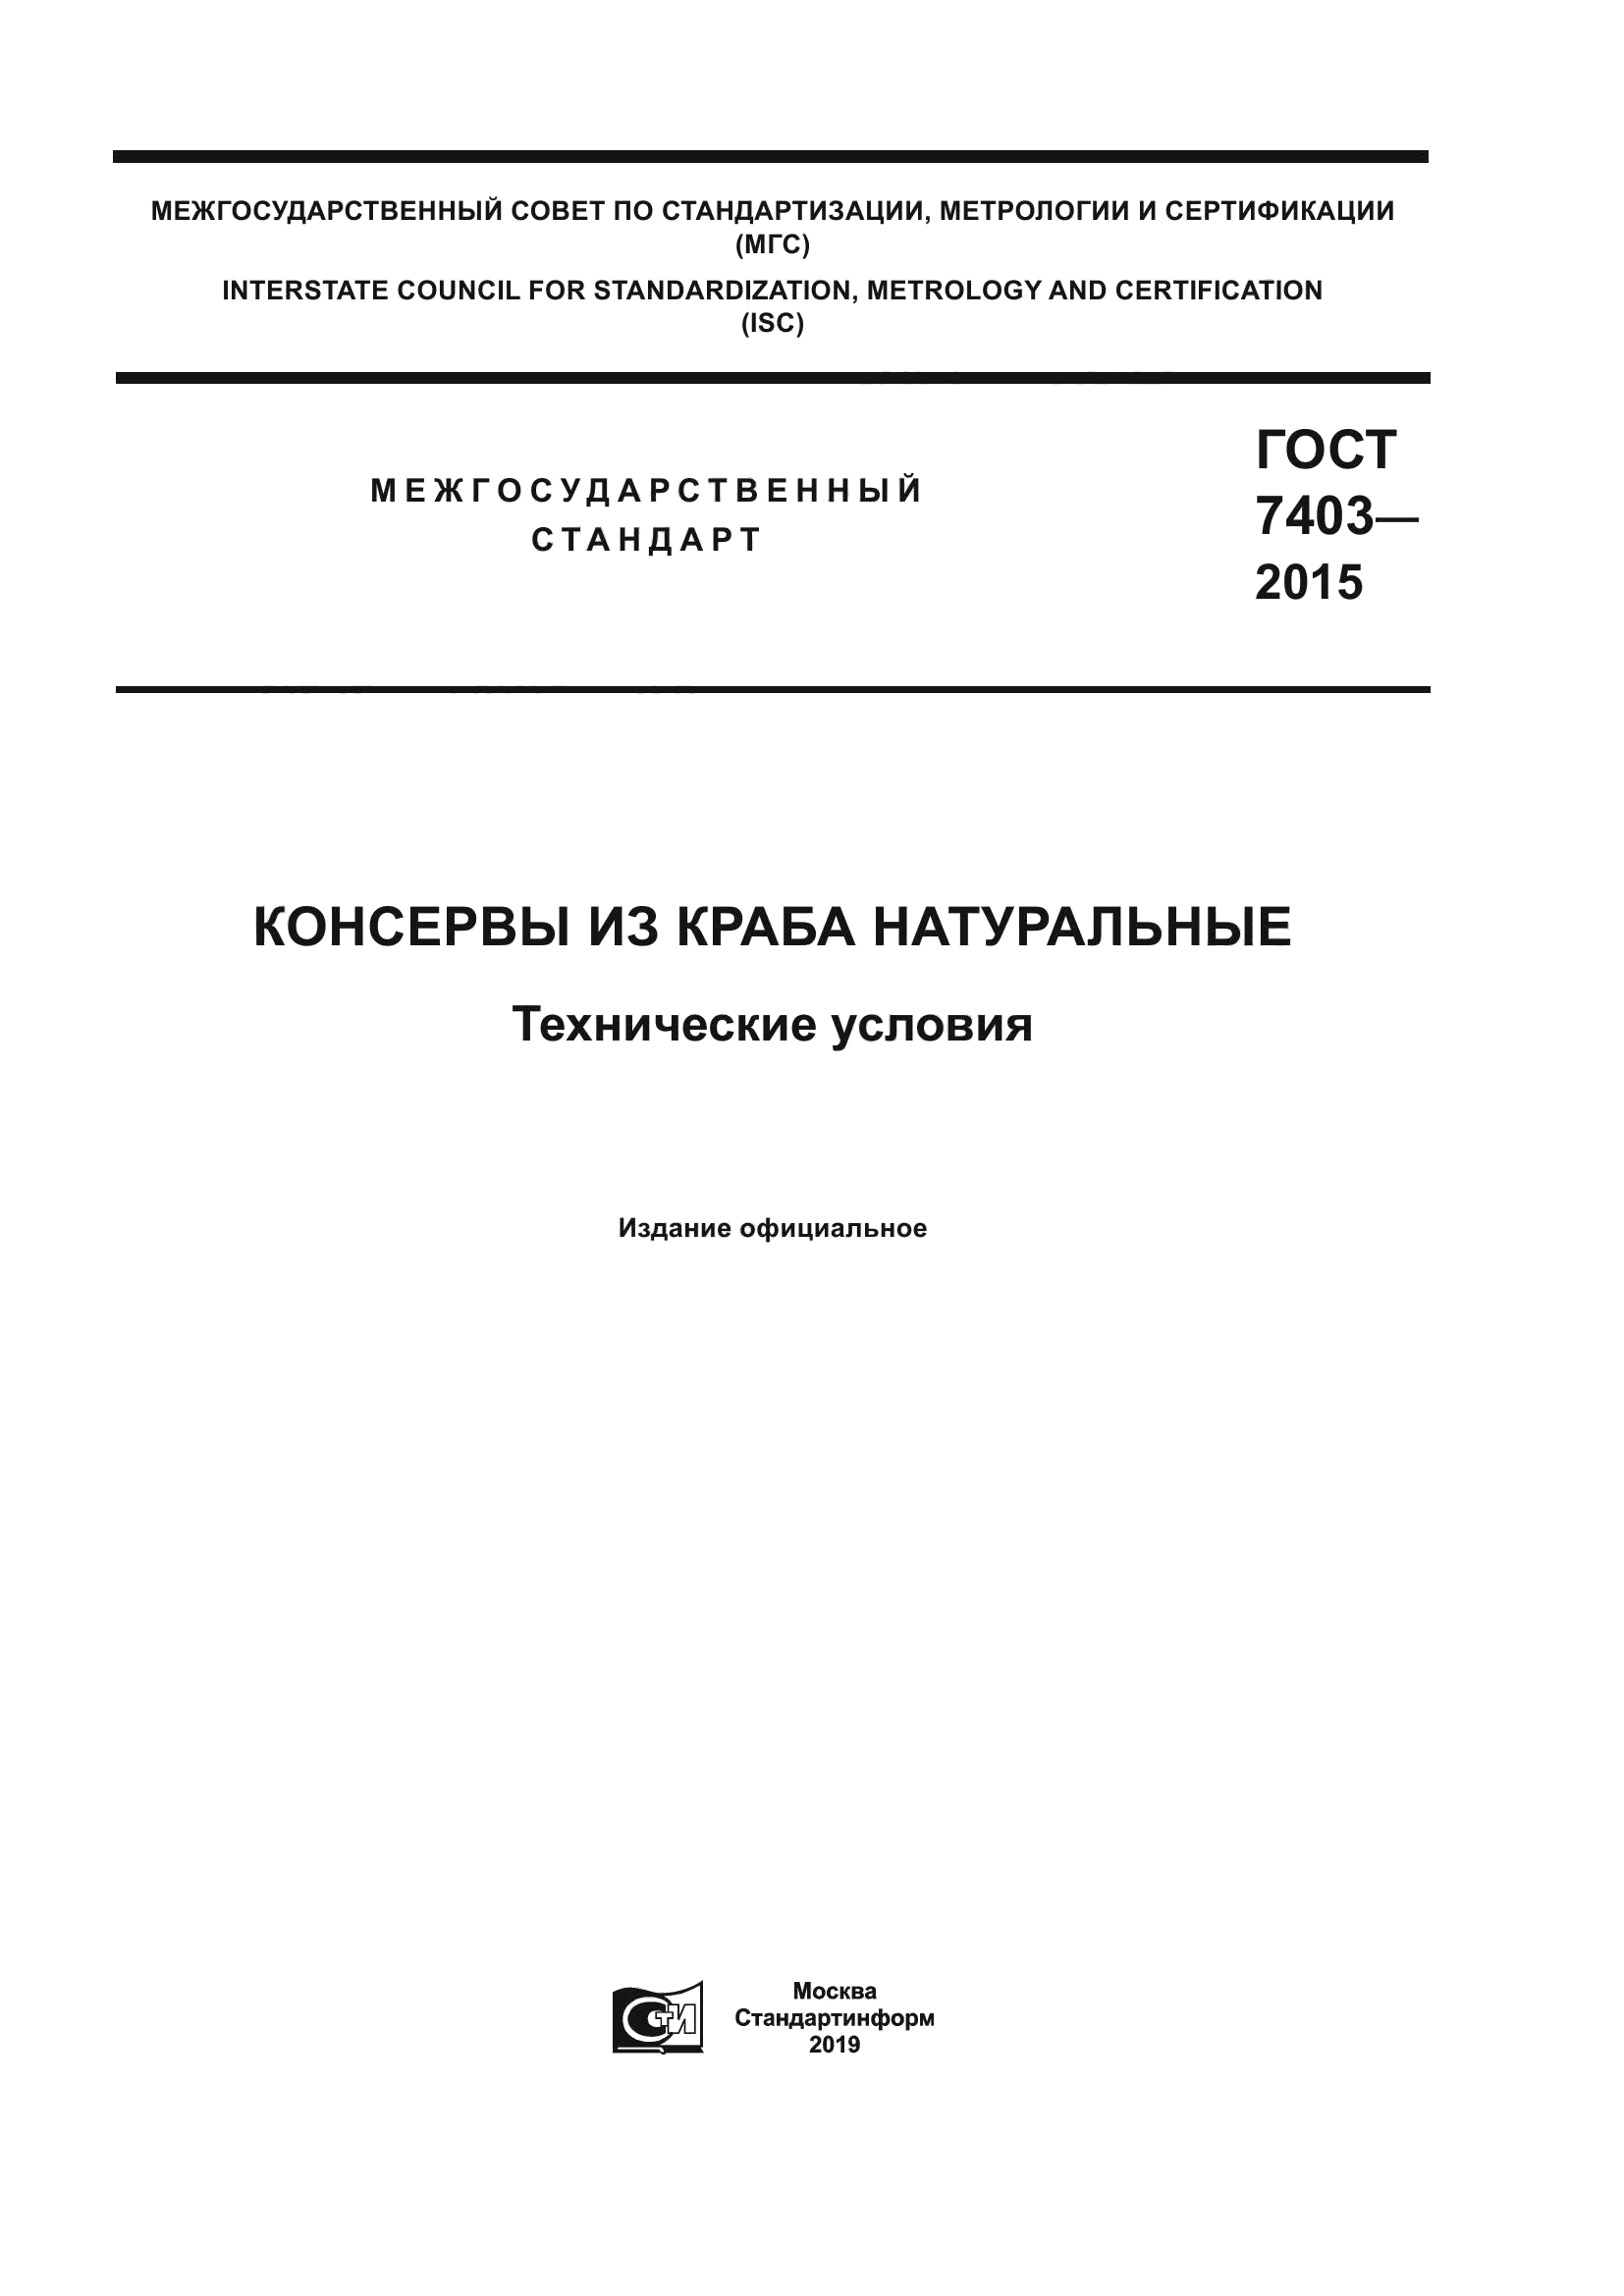 ГОСТ 7403-2015